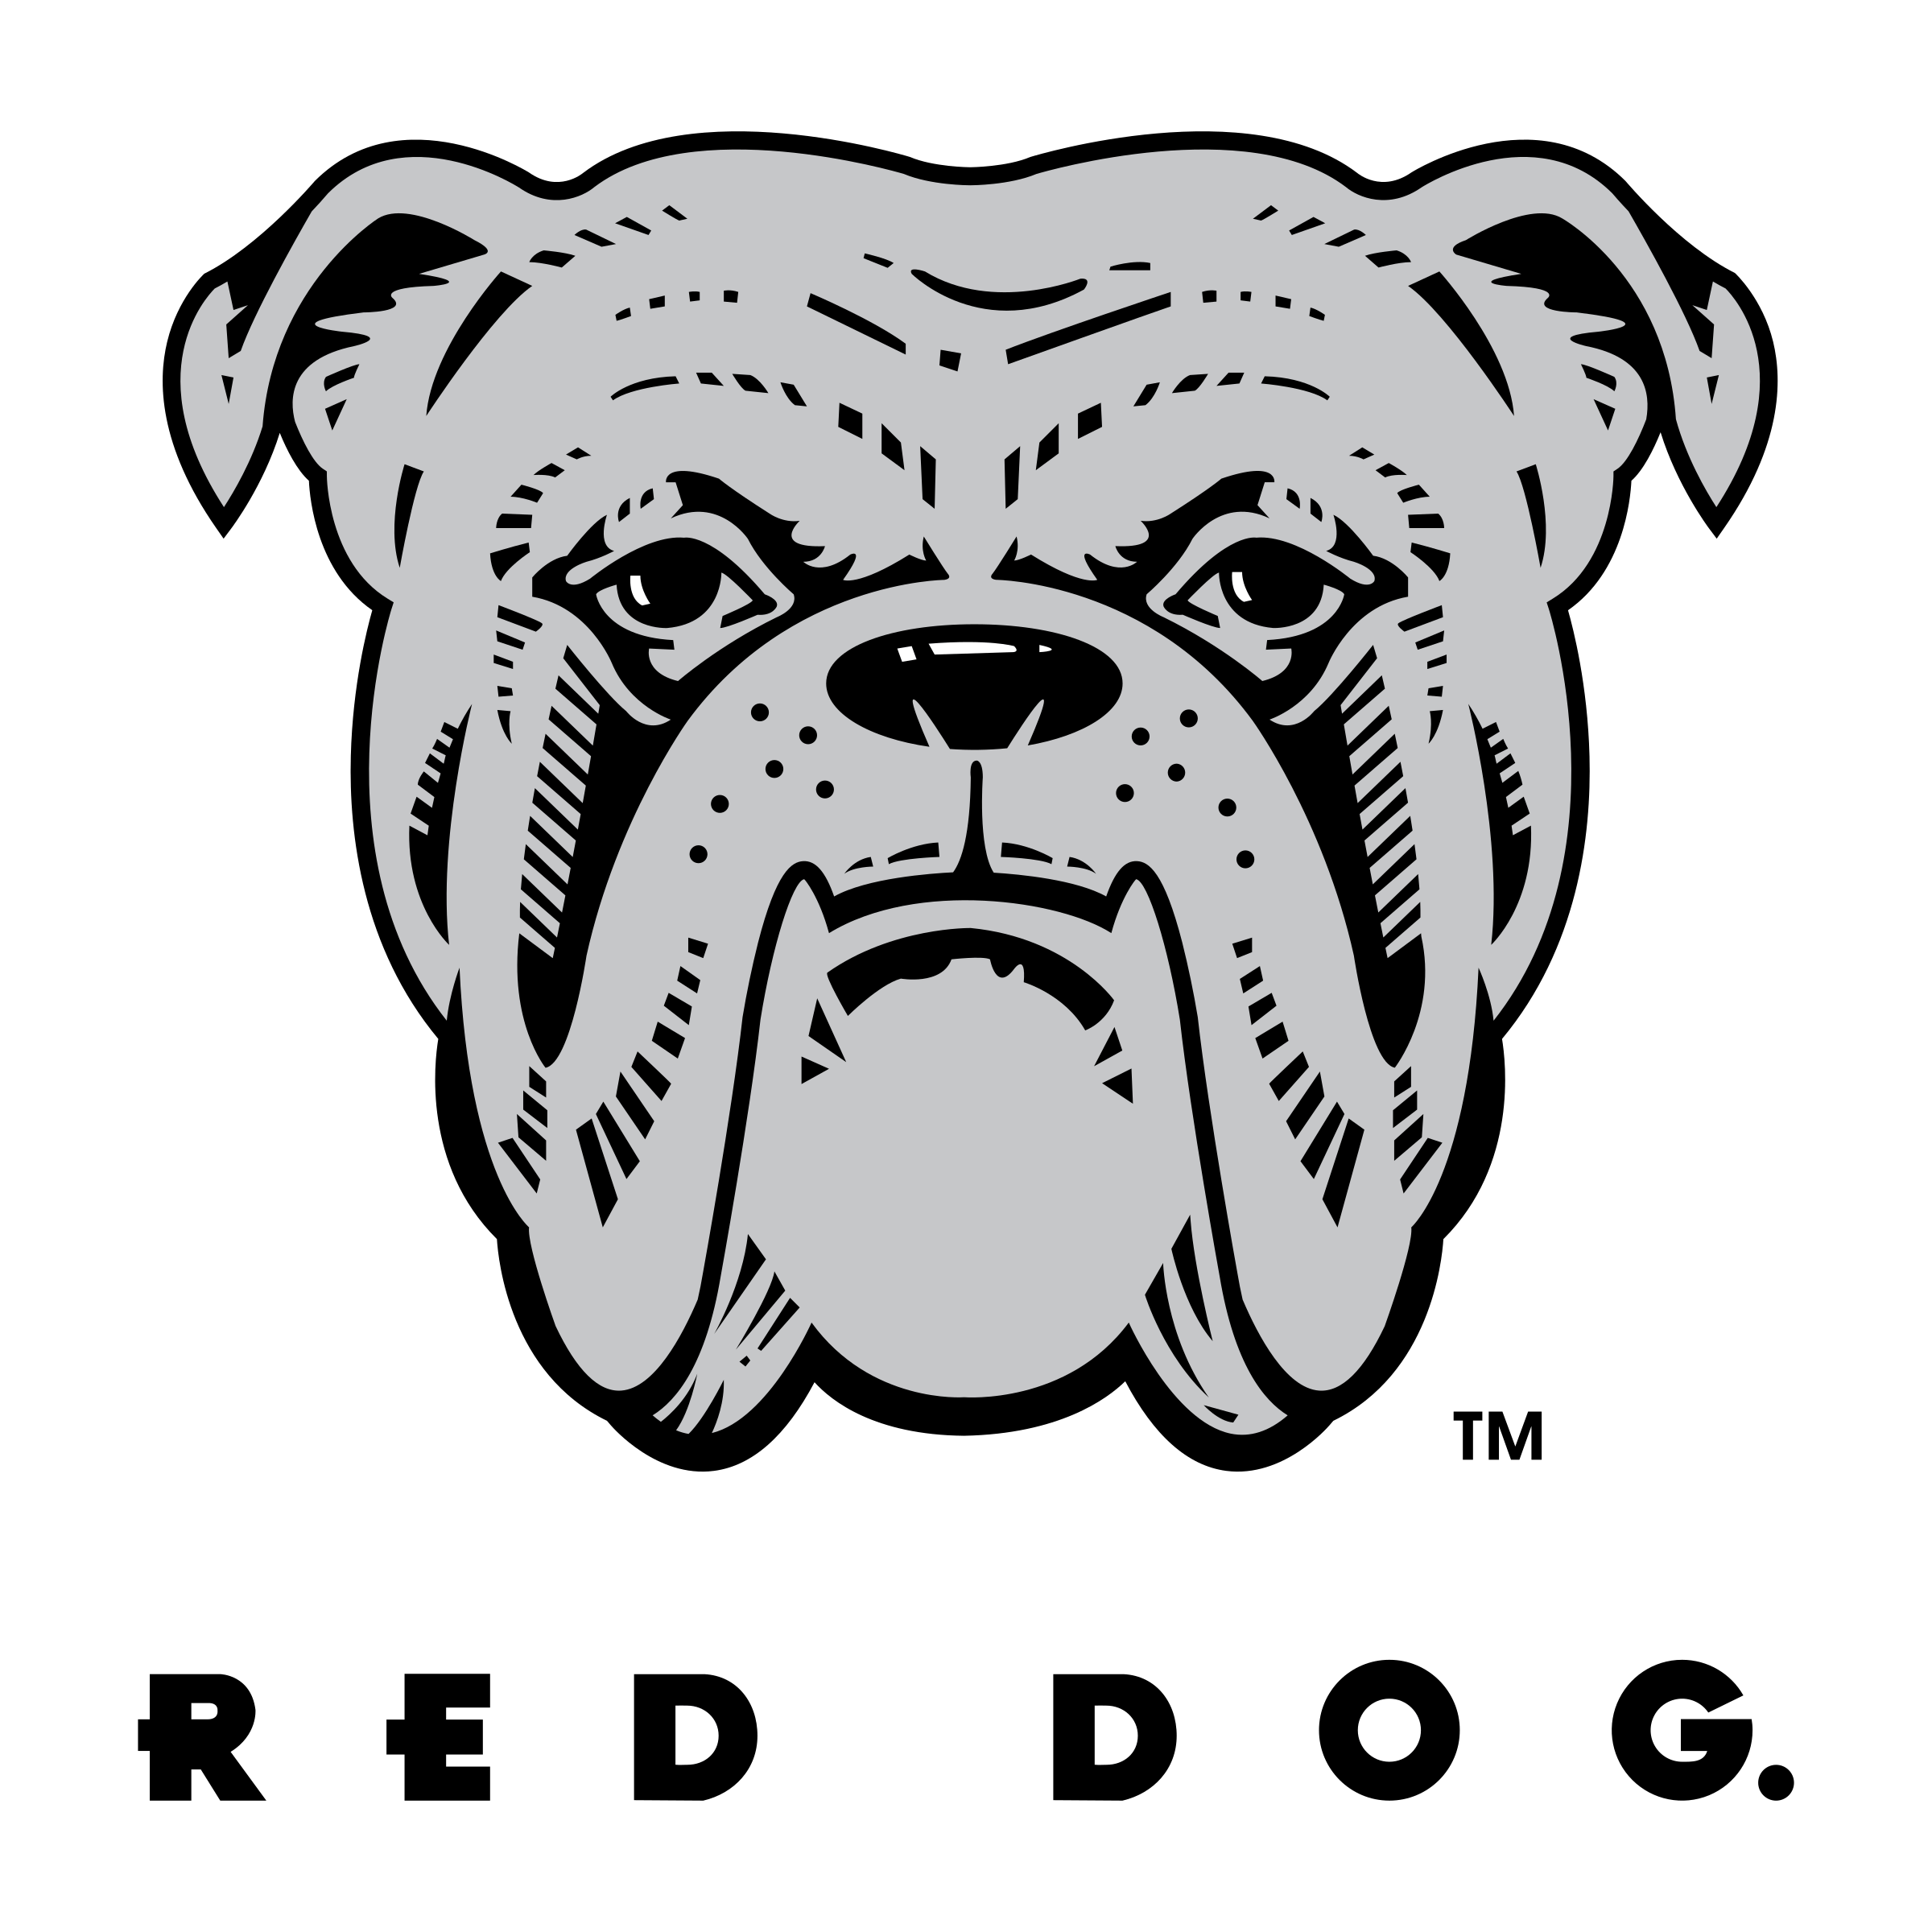 Red and White Dog Logo - Red Dog Logo PNG Transparent & SVG Vector